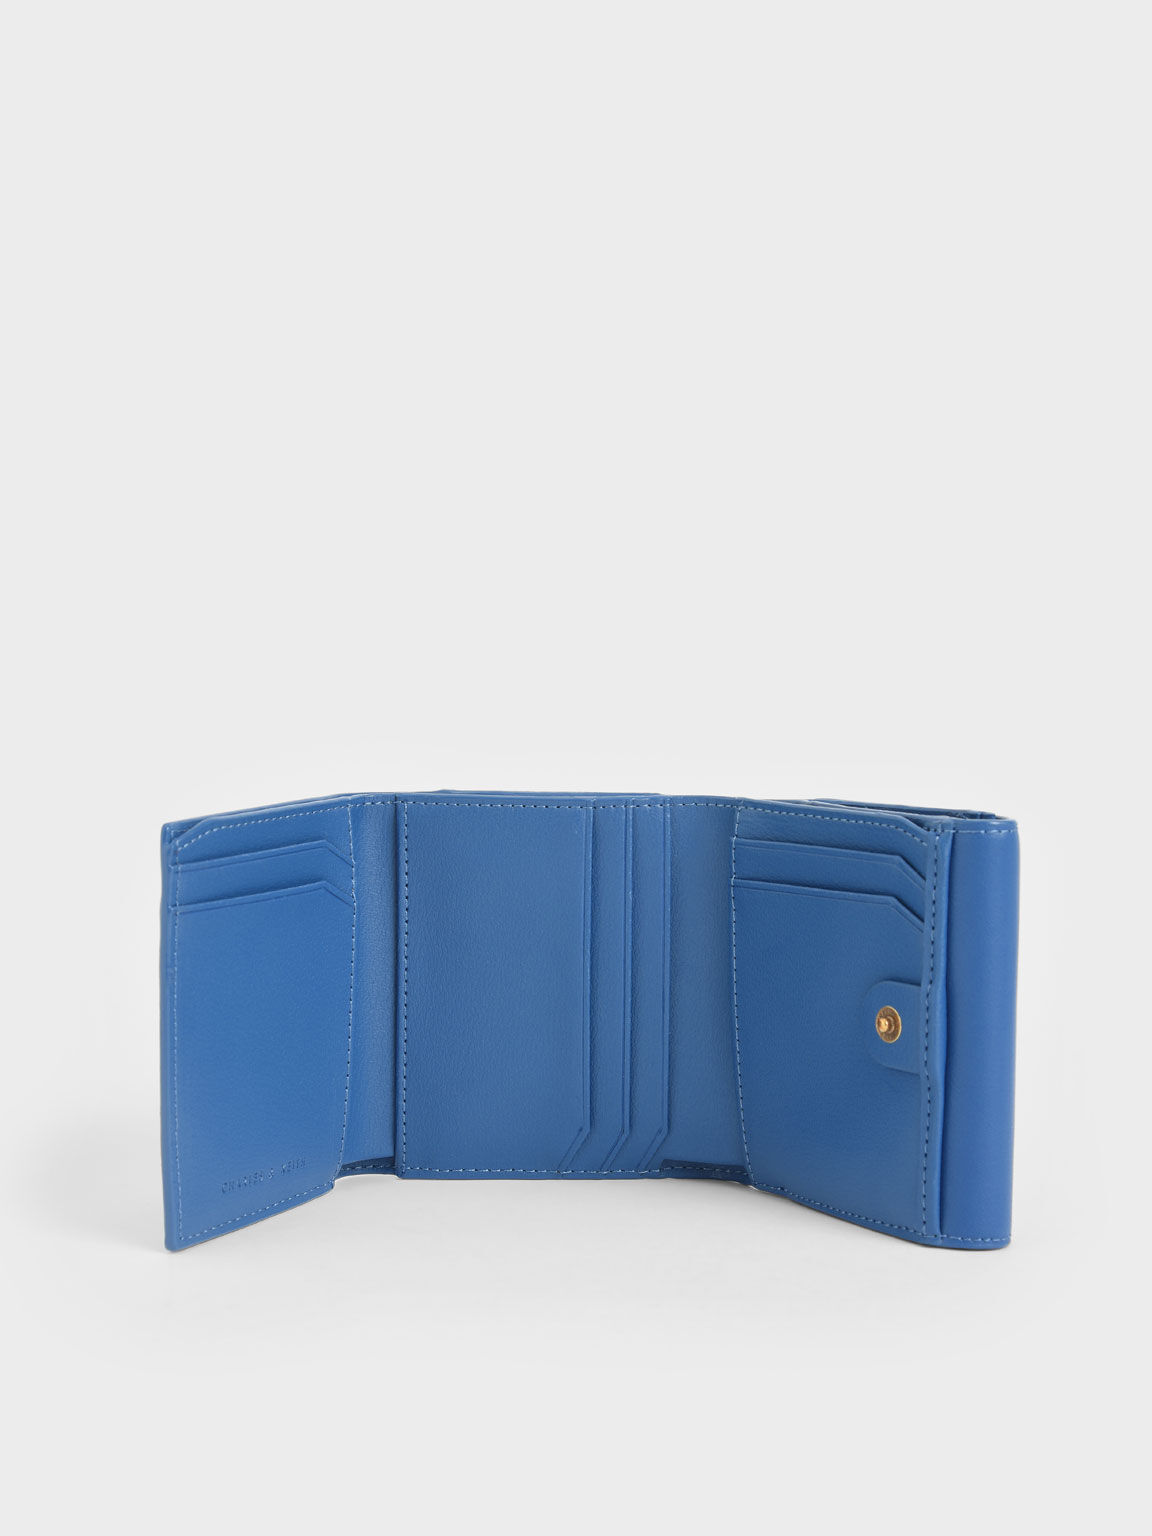 Edna Metallic Turn-Lock Short Wallet, Blue, hi-res